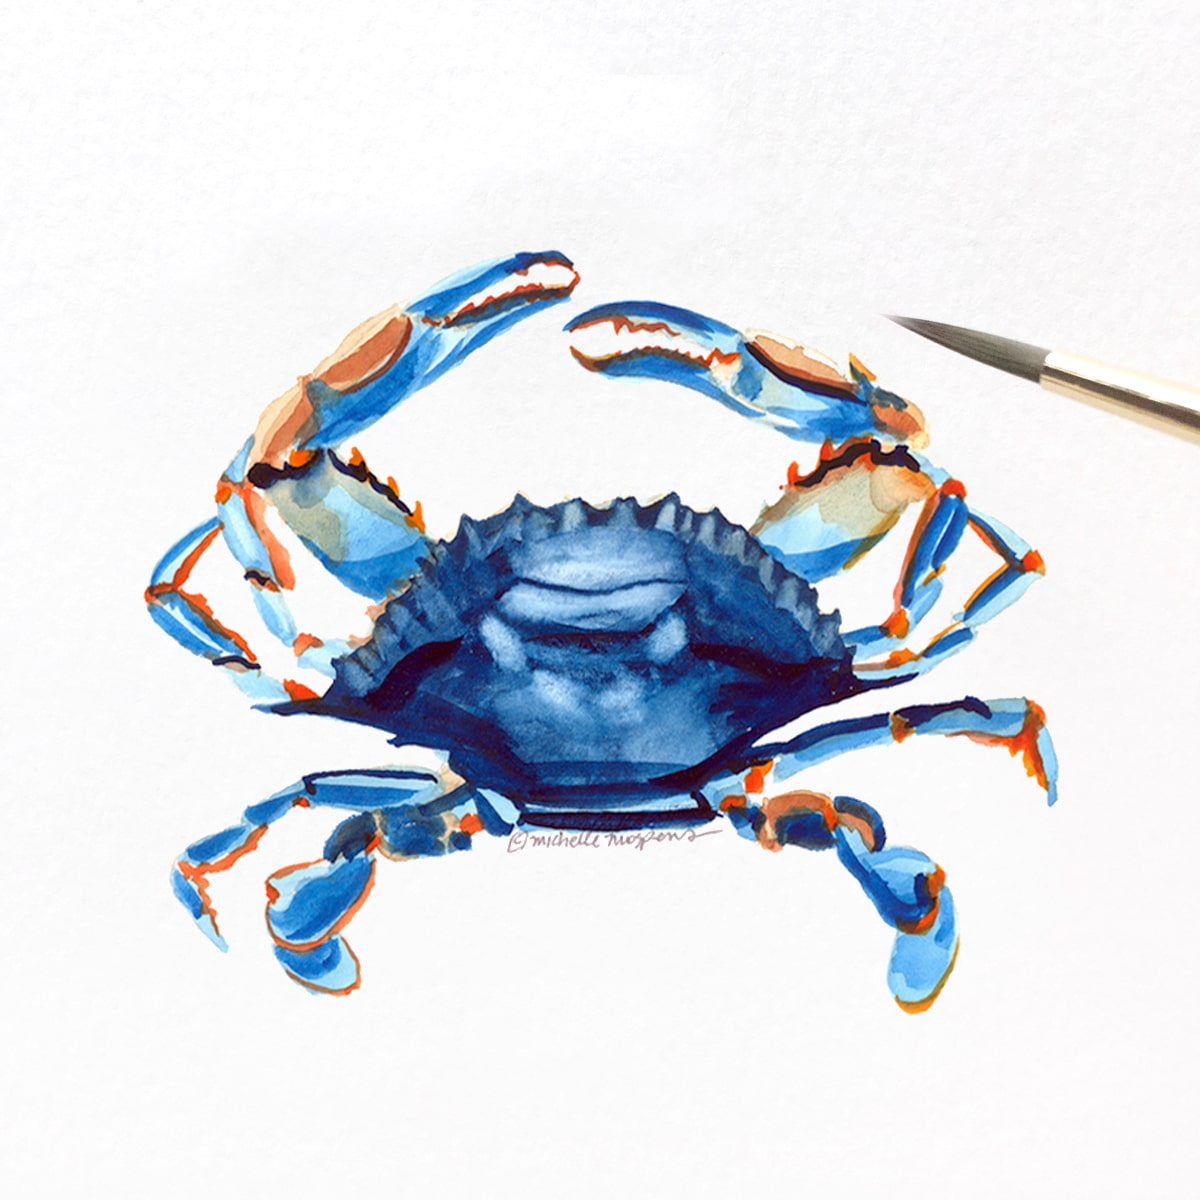 27 Sea-worthy Nautical Wedding Invitations. Hand-painted blue crab nautical illustration by artist Michelle Mospens. Mospens Studio